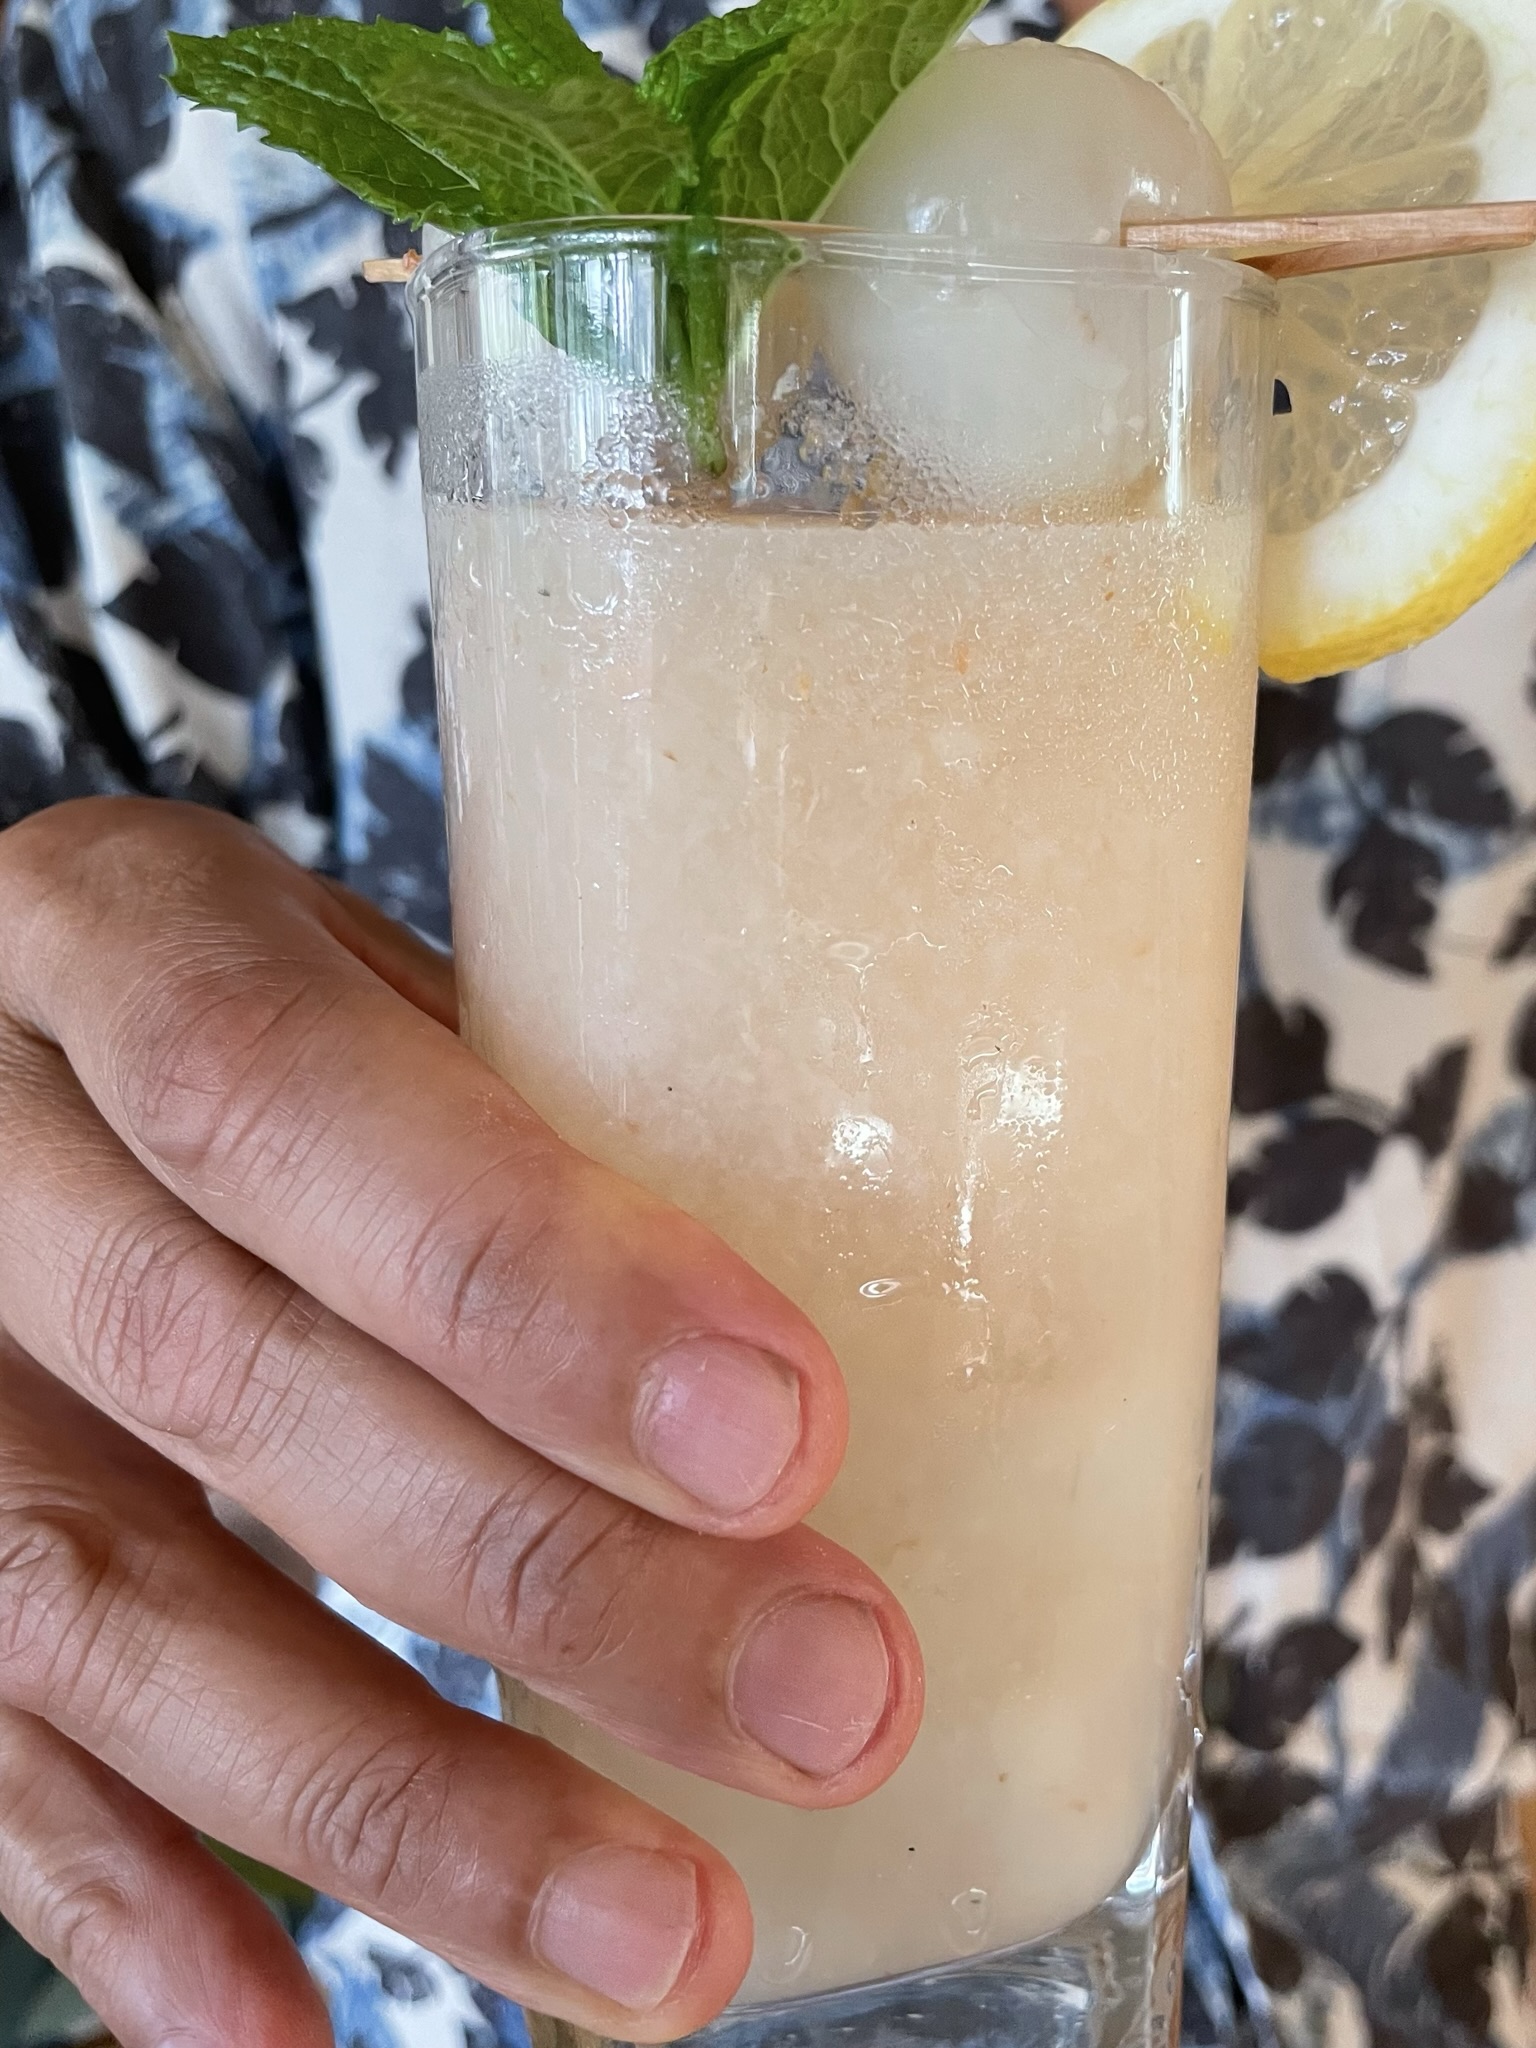 Holding lychee lemonade drink